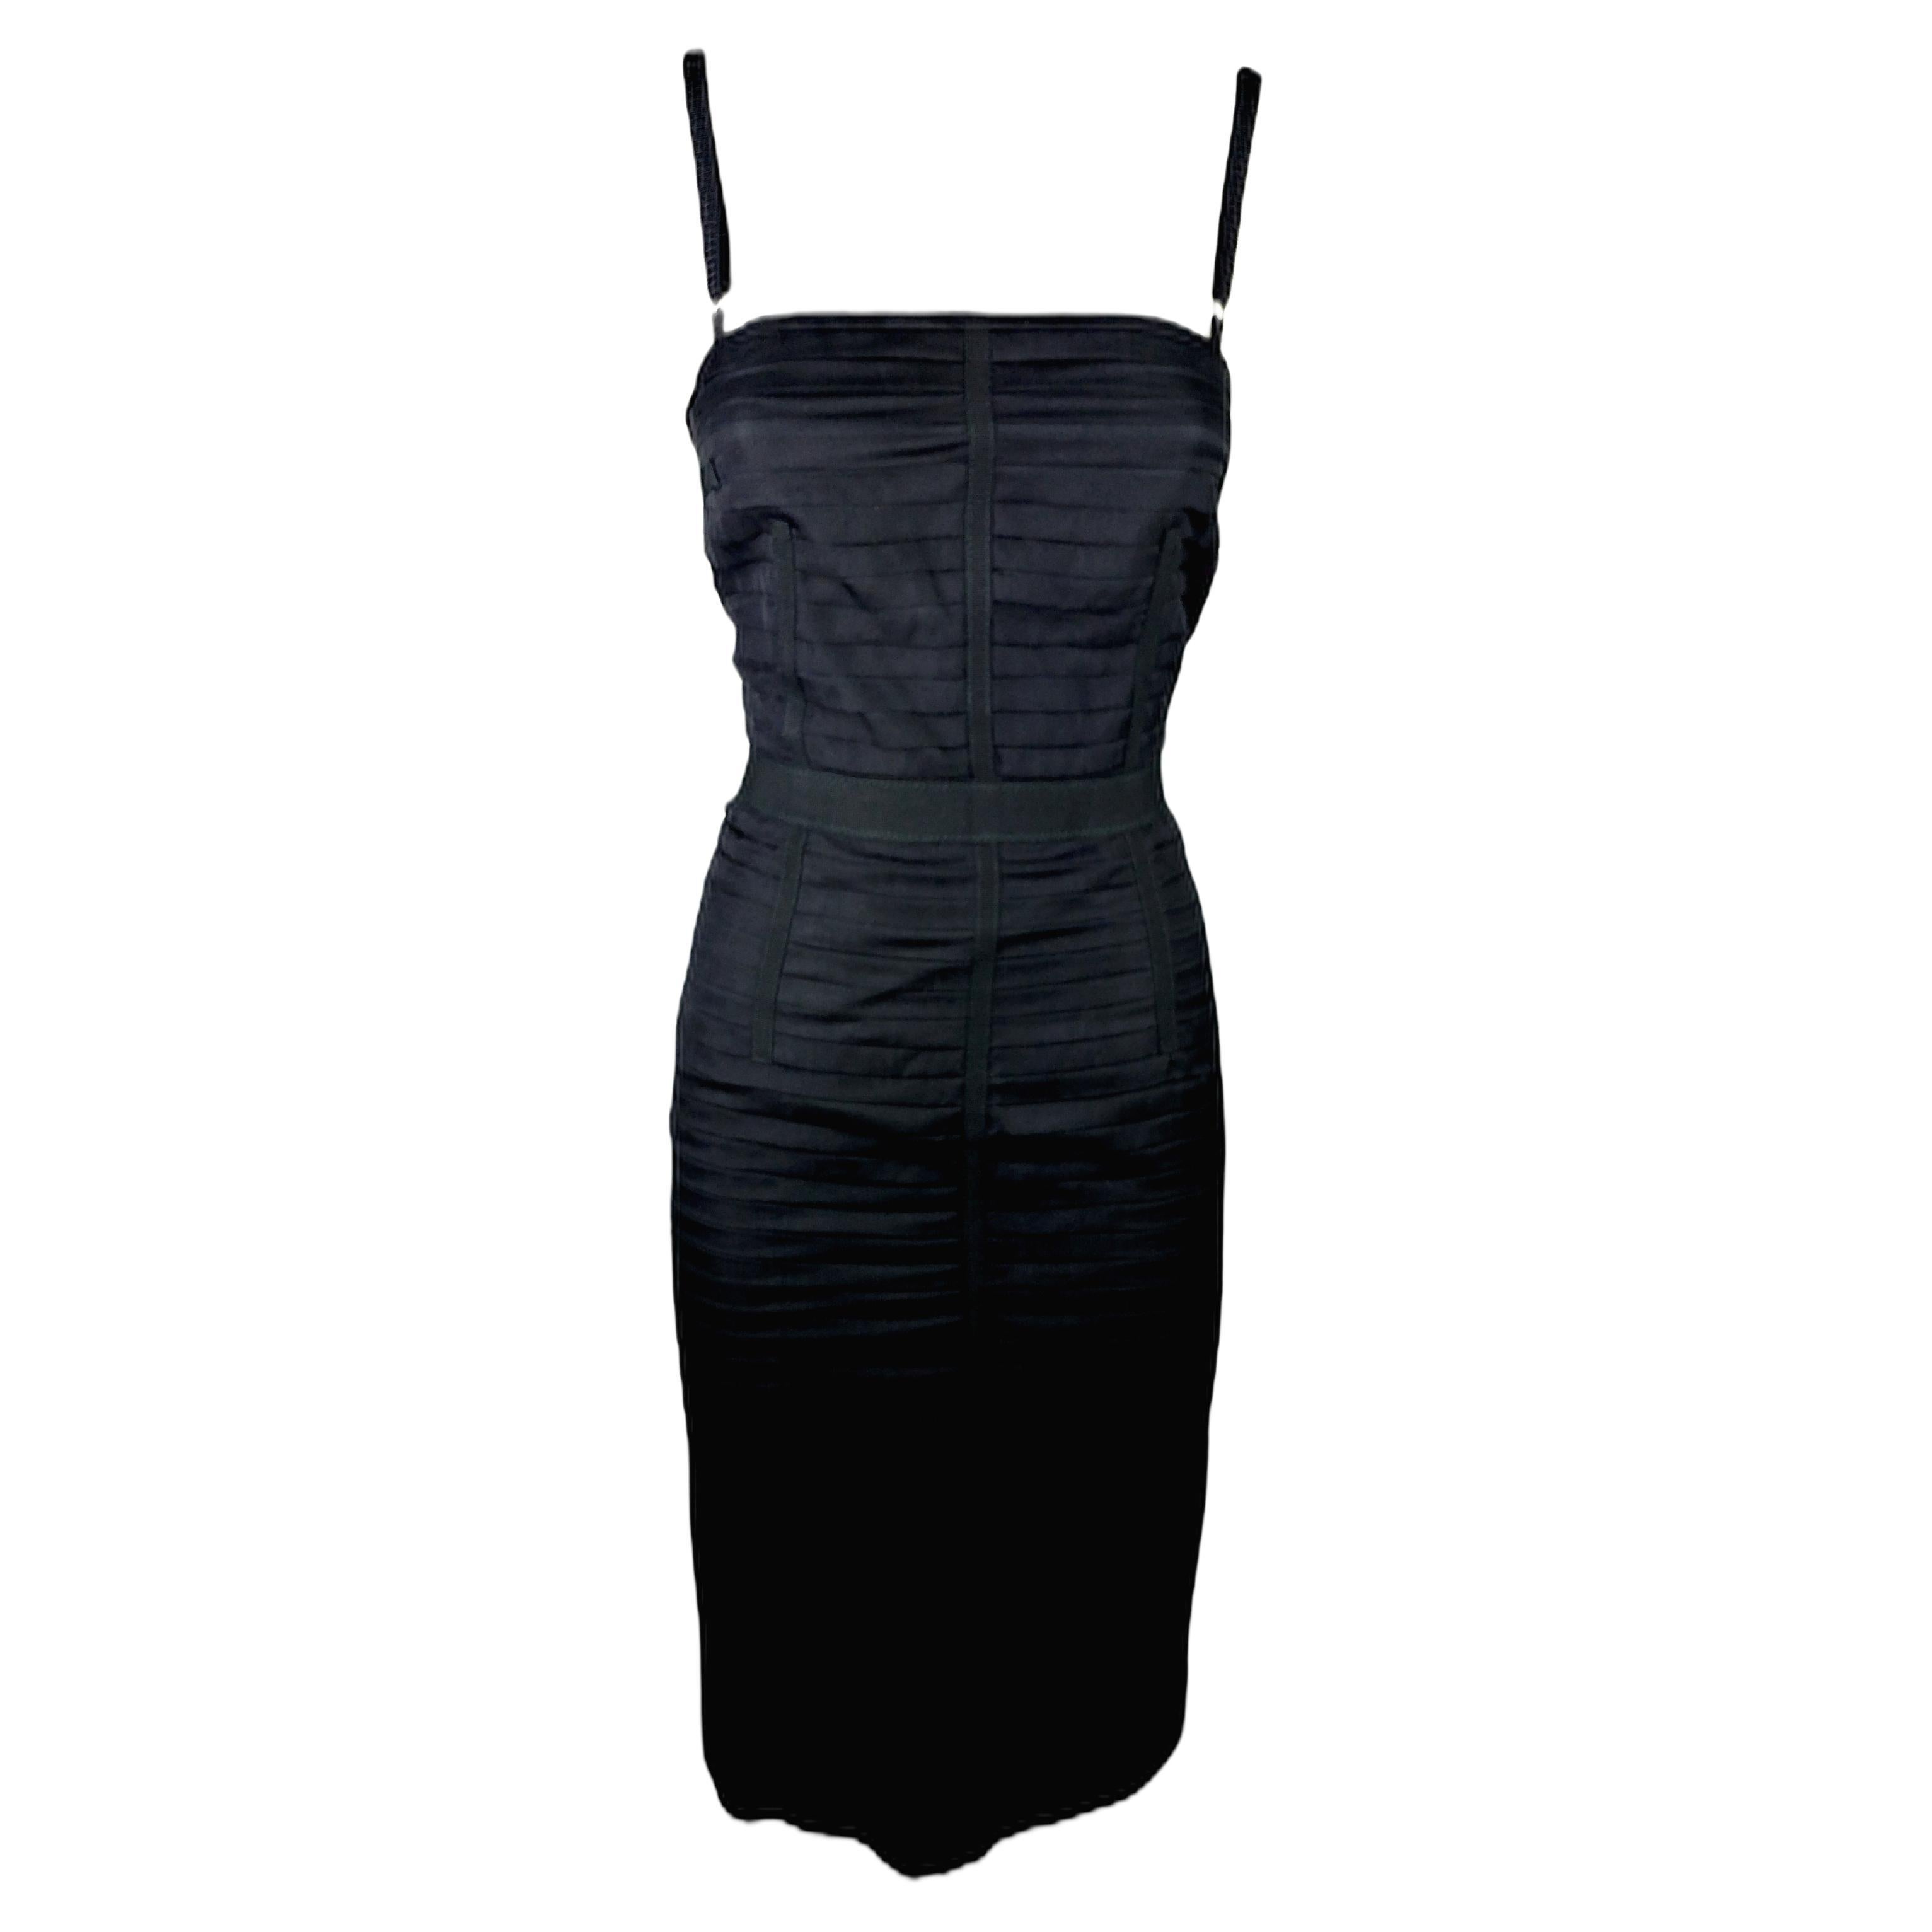 DOLCE&GABBANA Black Slip Dress with Pleats and Adjustable Straps  Size 2US 34EU